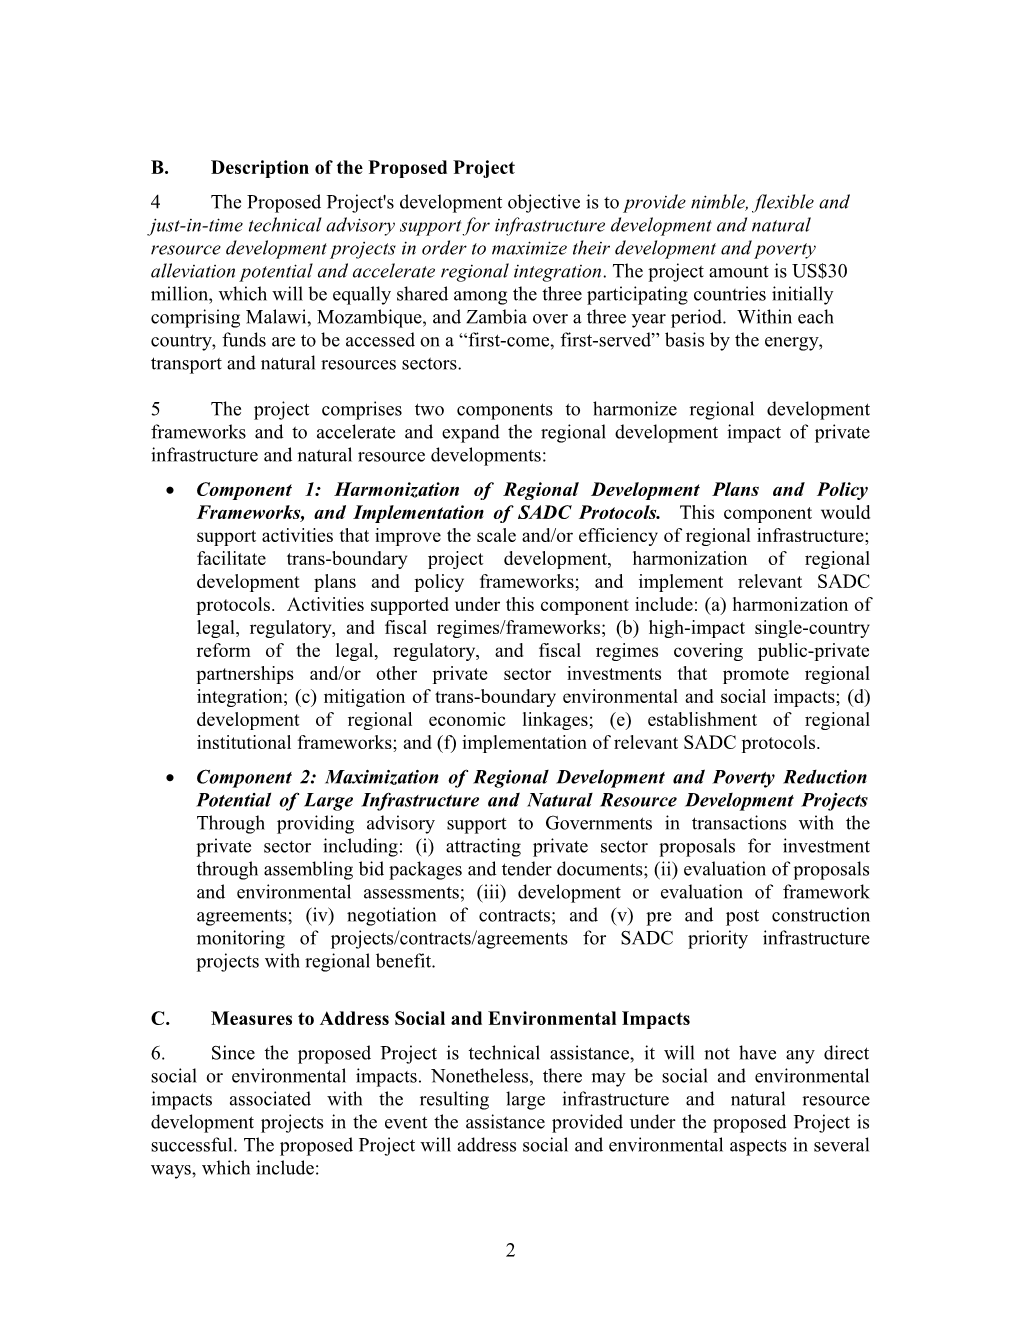 Disclosure of an Environmental Impact Assessment Framework